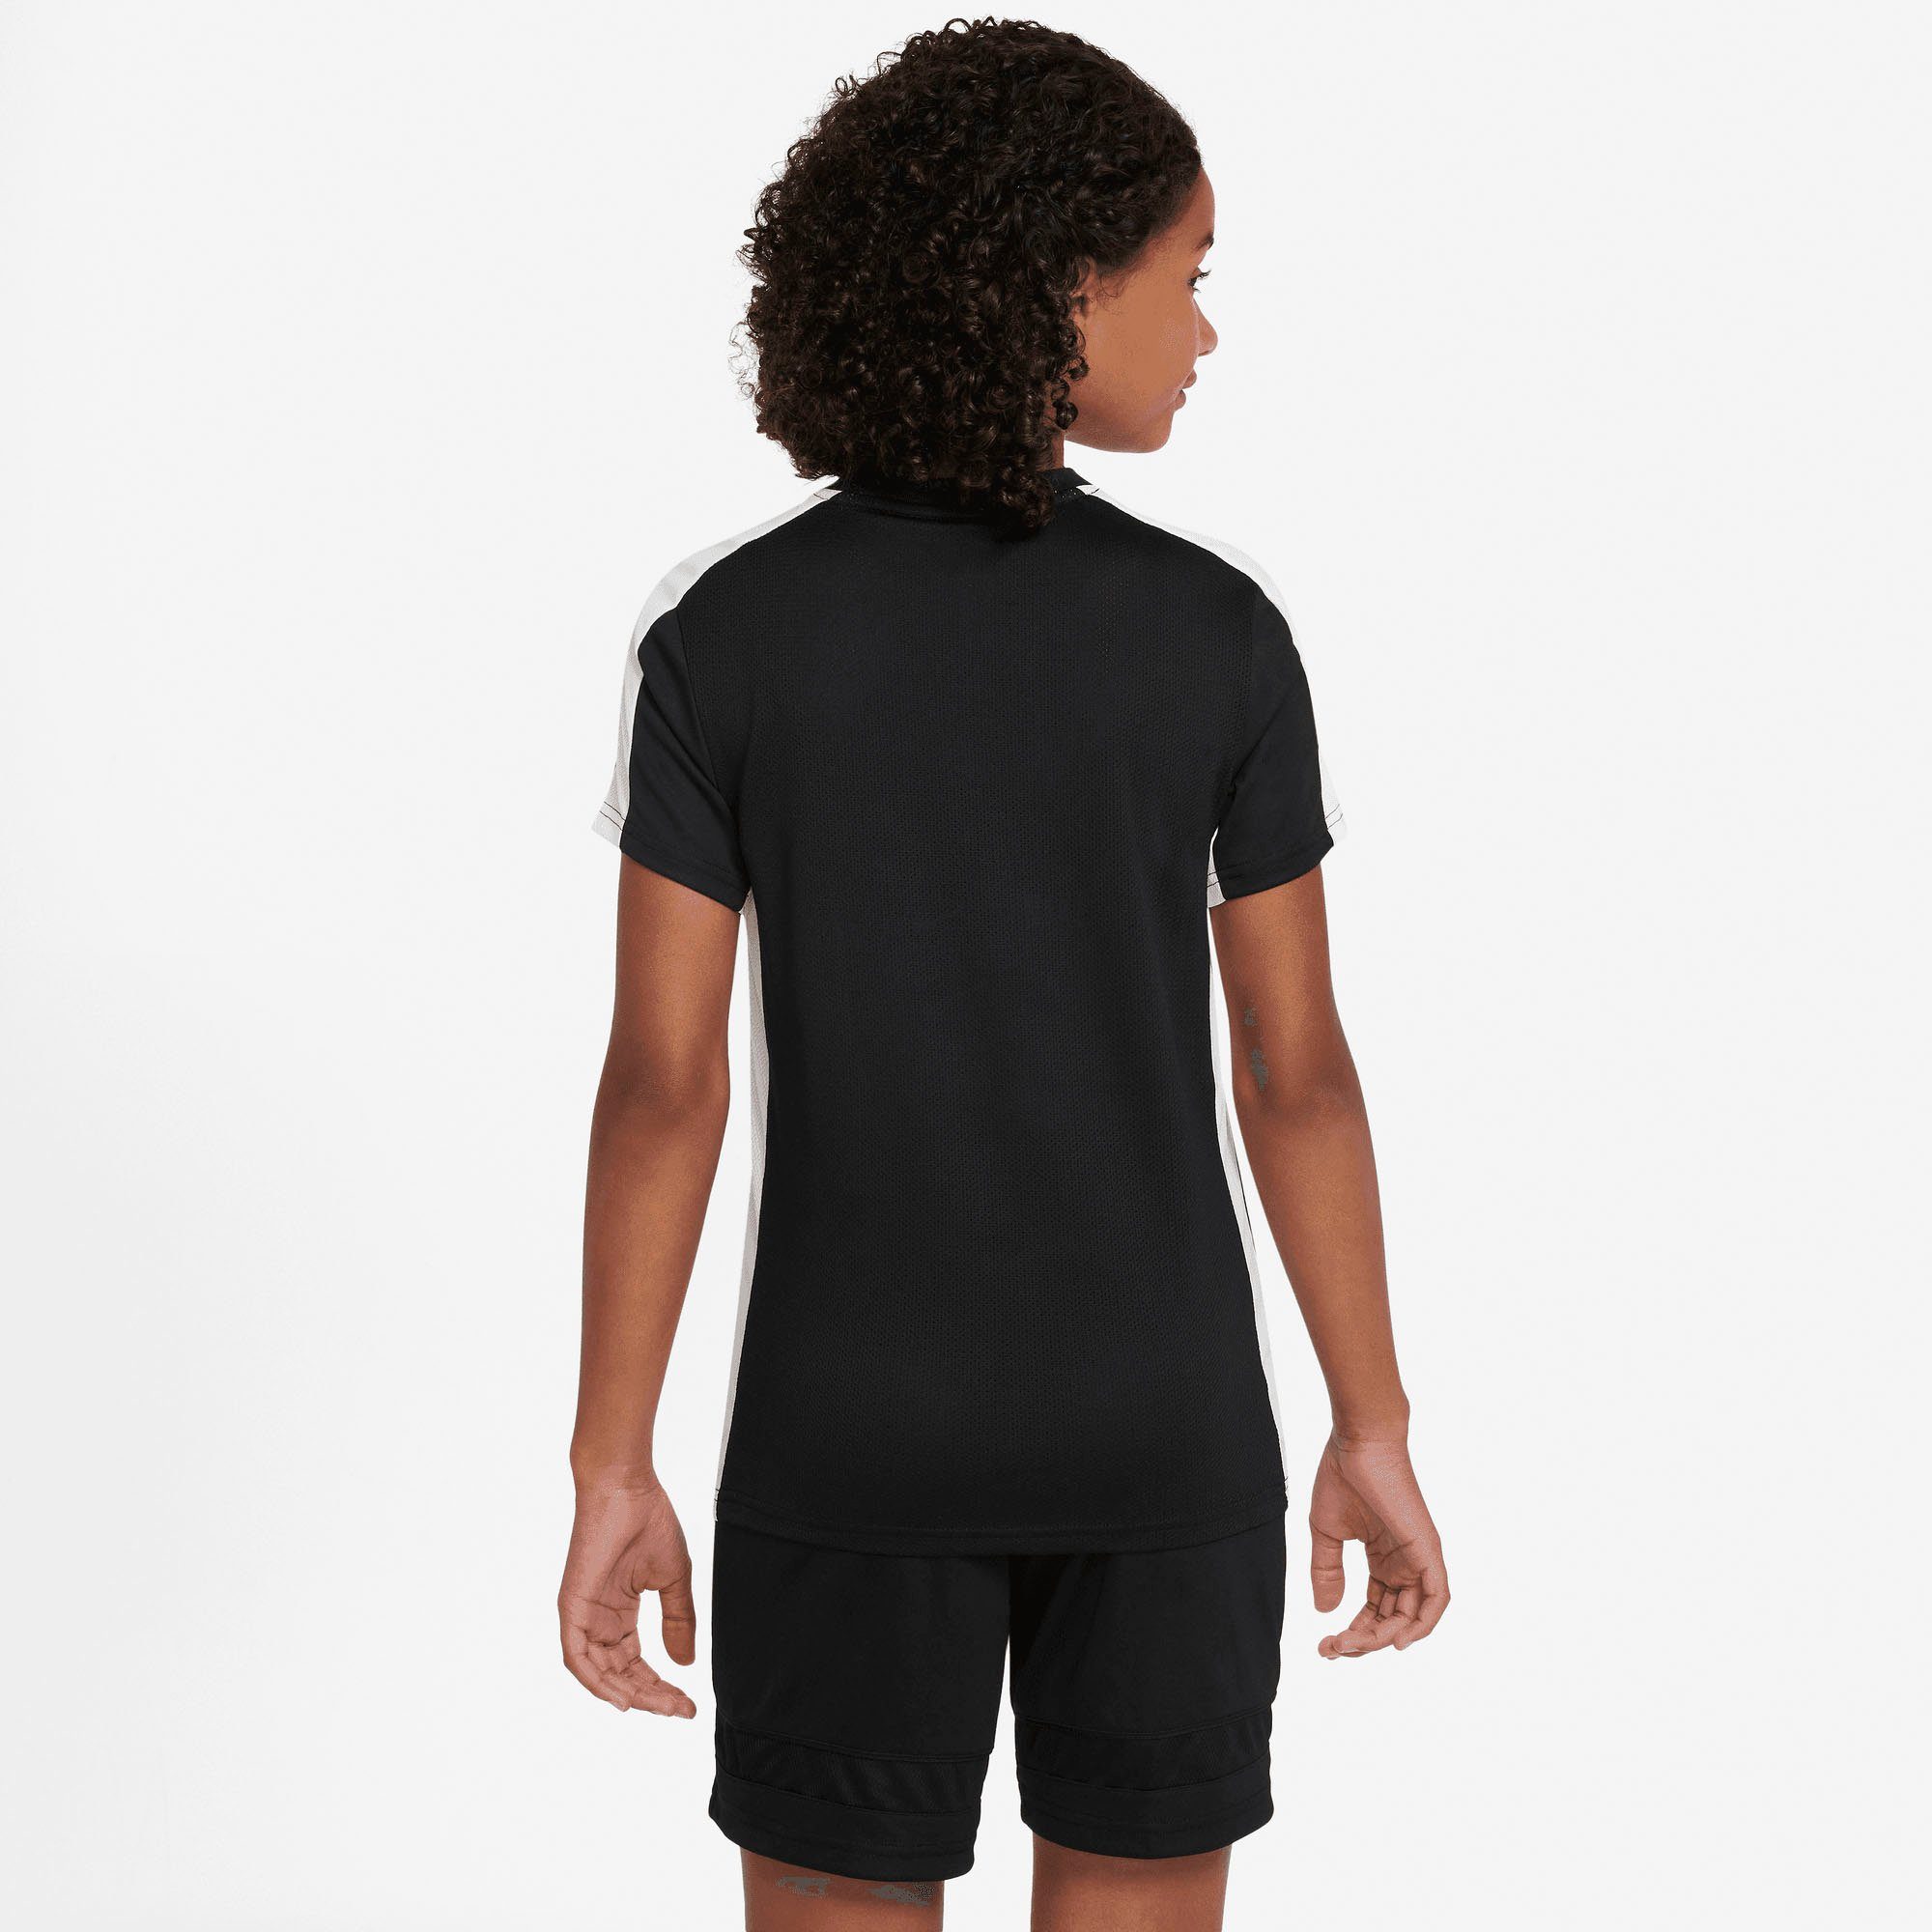 TOP KIDS' ACADEMY Nike Trainingsshirt BLACK/WHITE/WHITE DRI-FIT